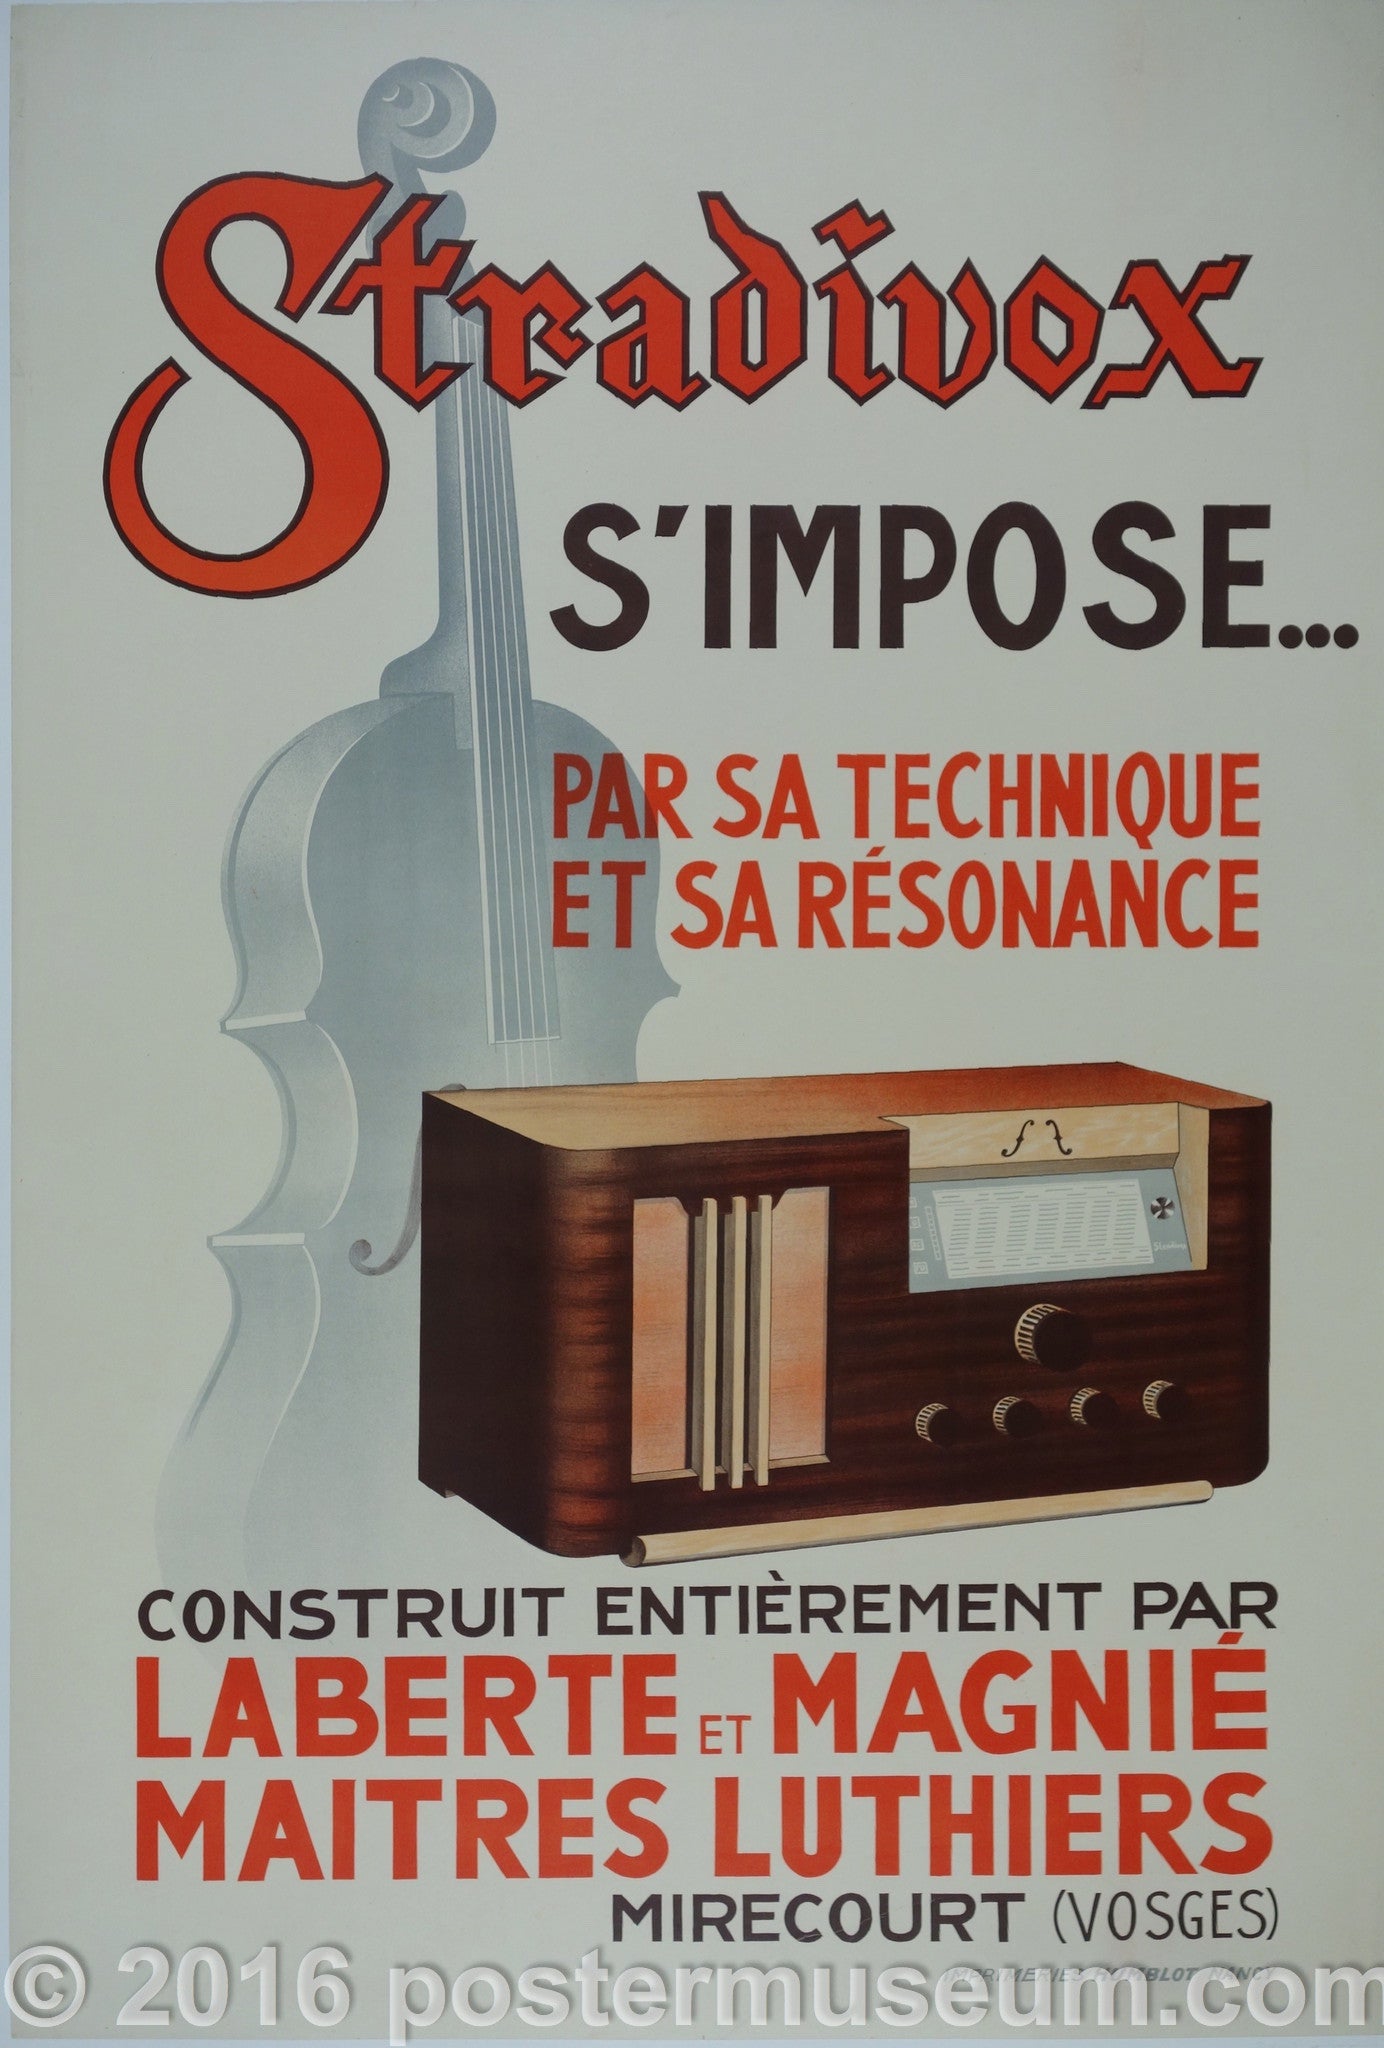 Stradivox